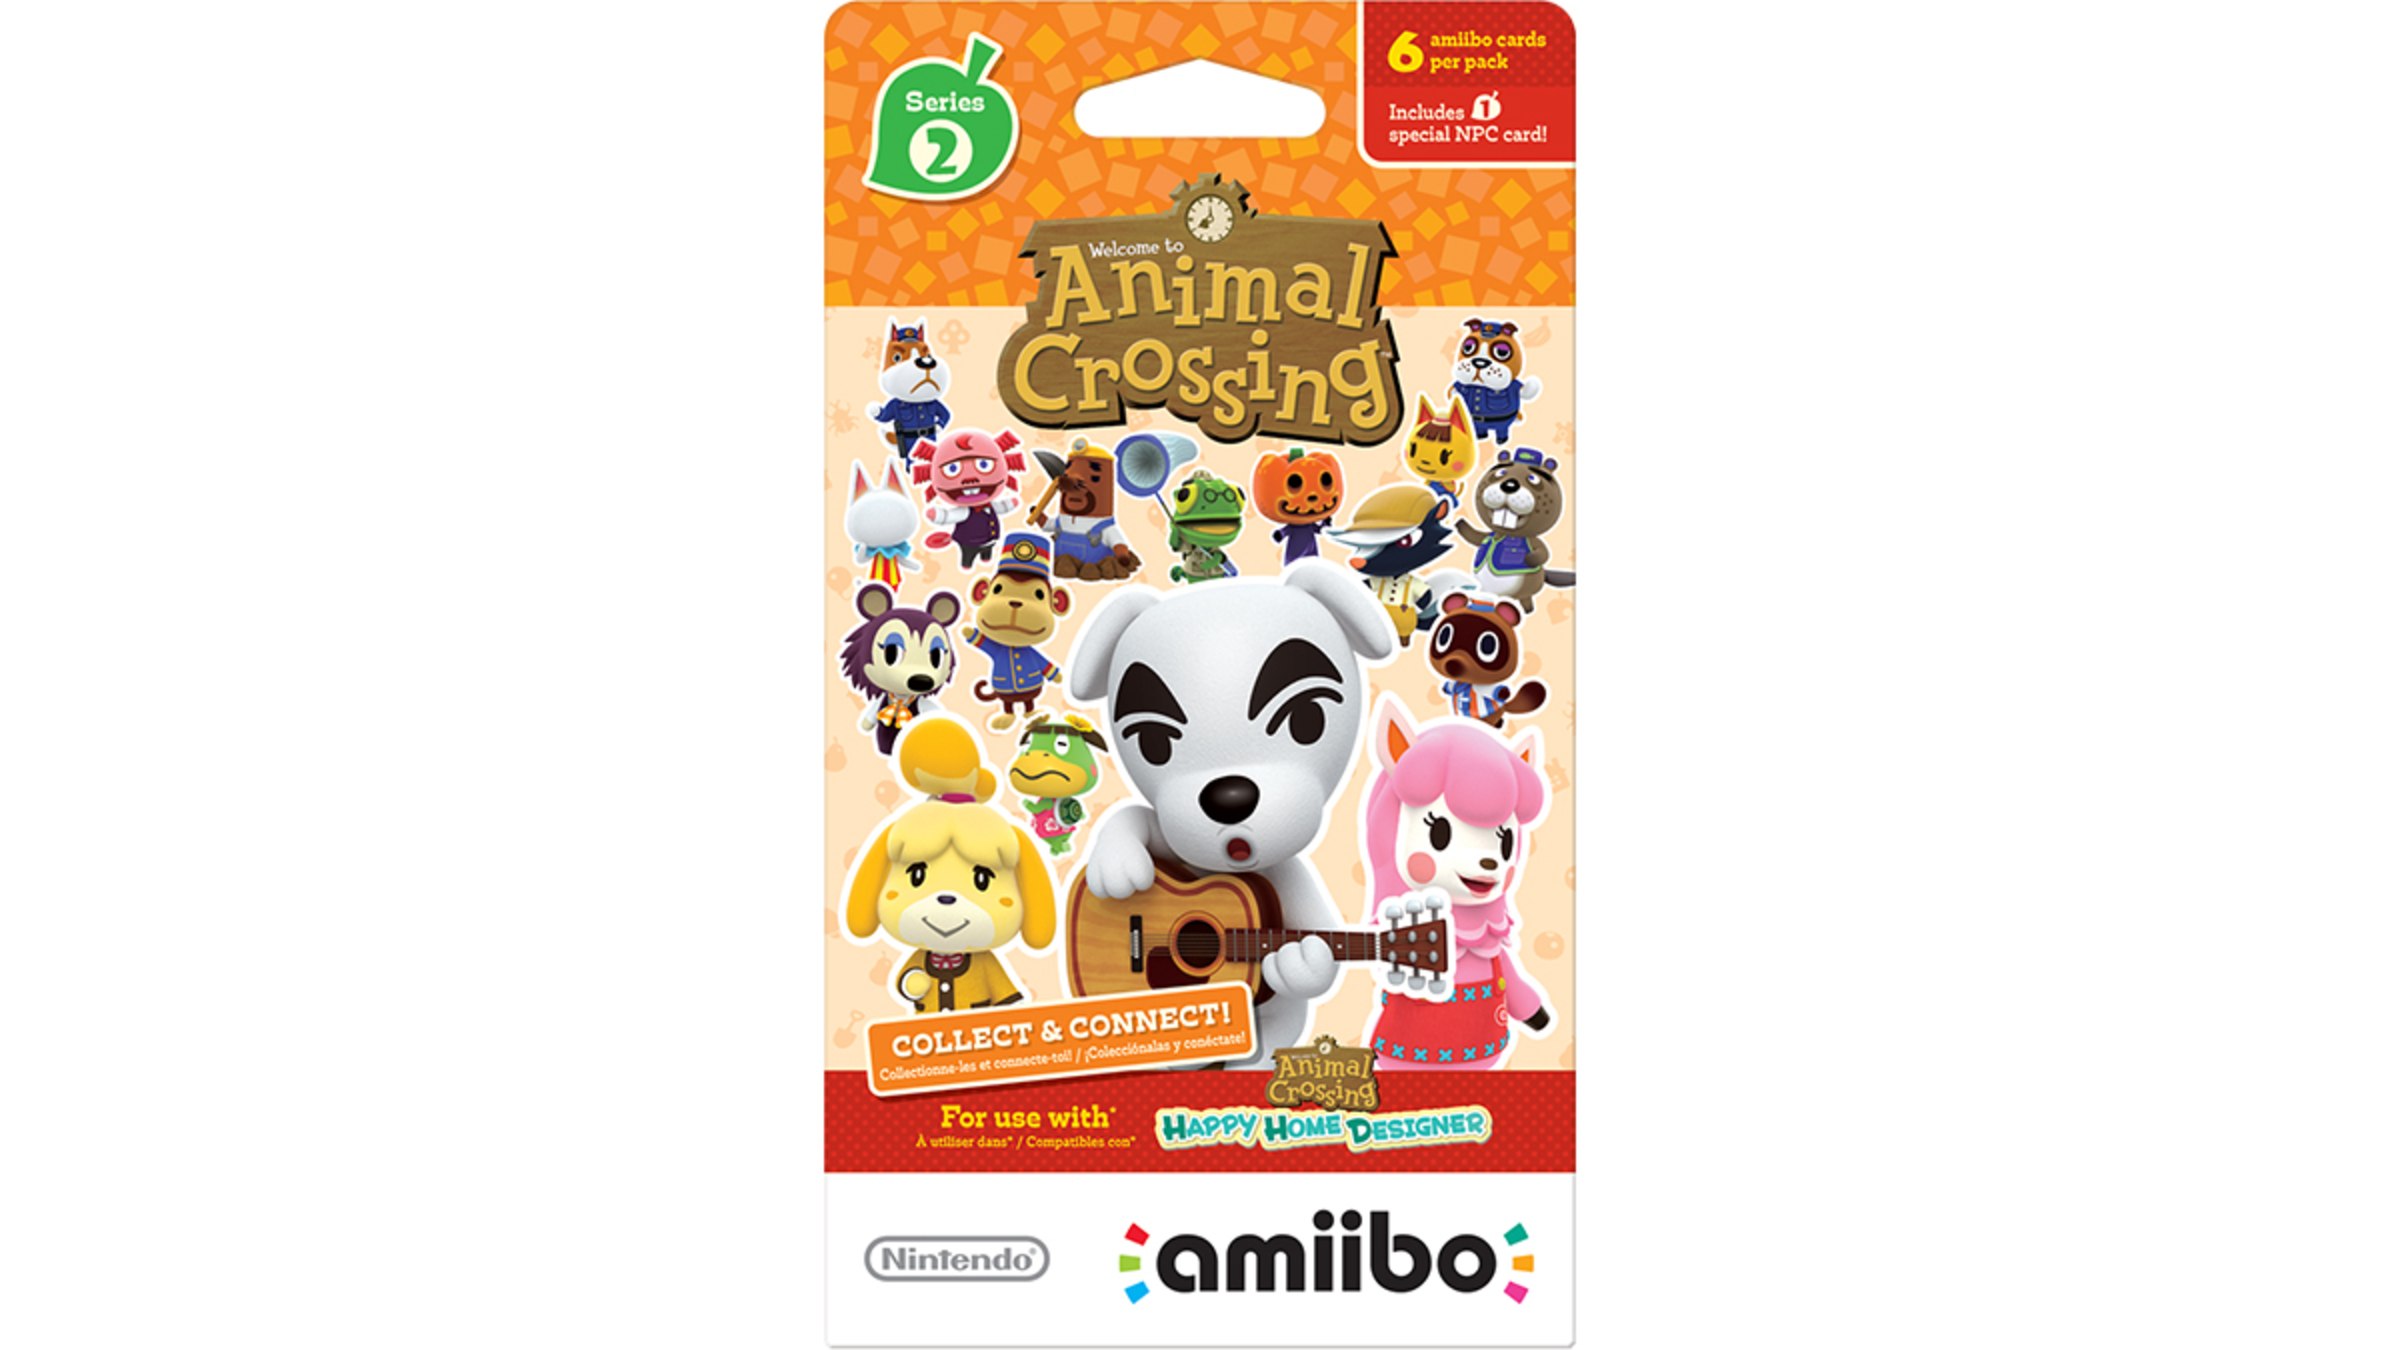 Animal Crossing amiibo Cards - Series 2 - Nintendo Official Site